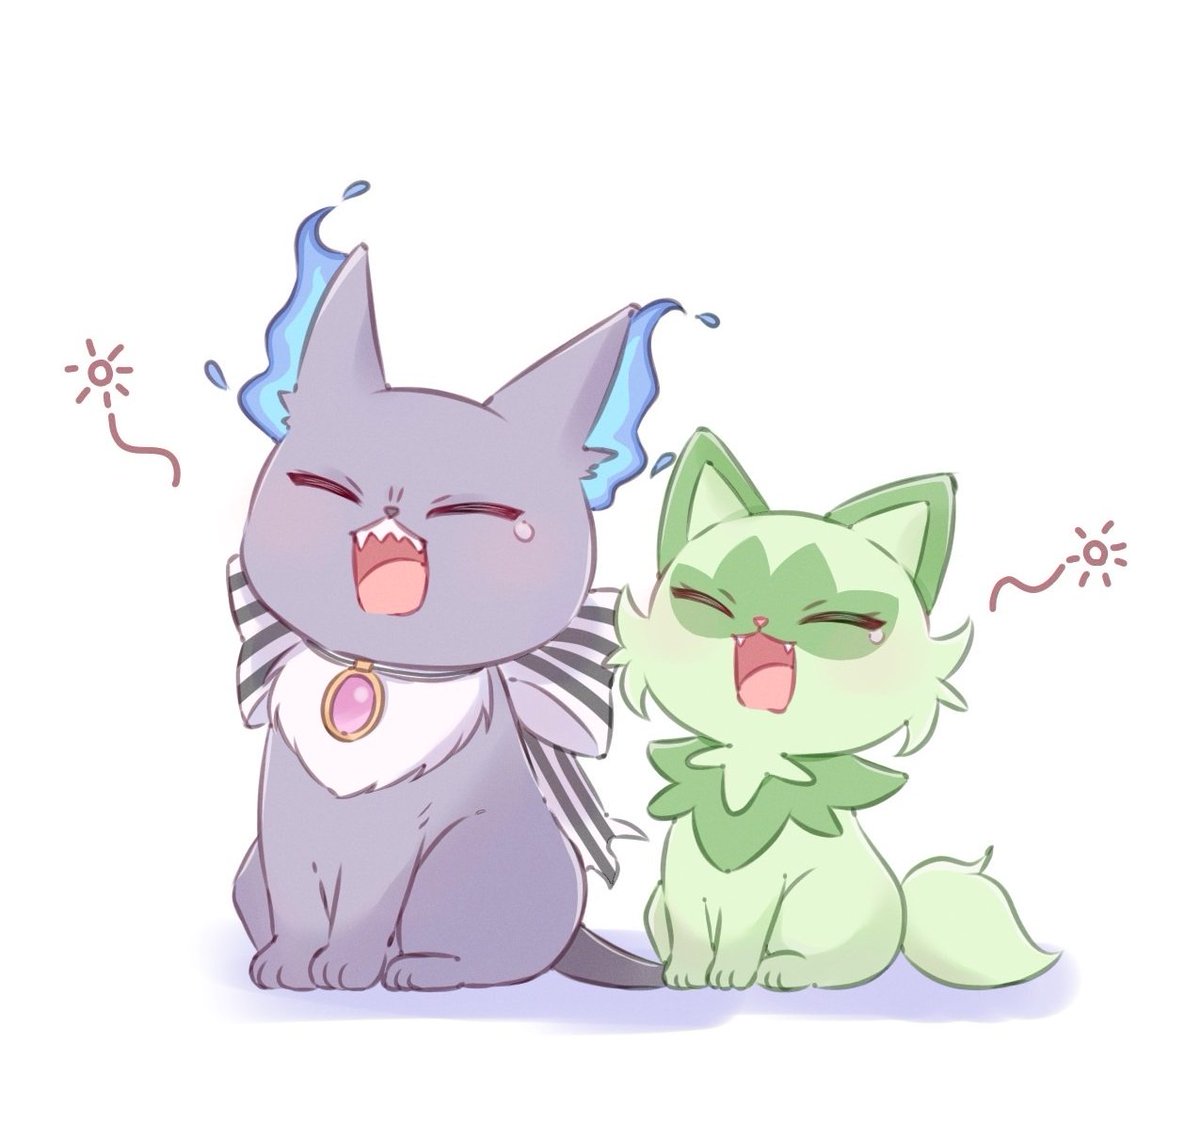 no humans yawning closed eyes open mouth pokemon (creature) cat white background  illustration images